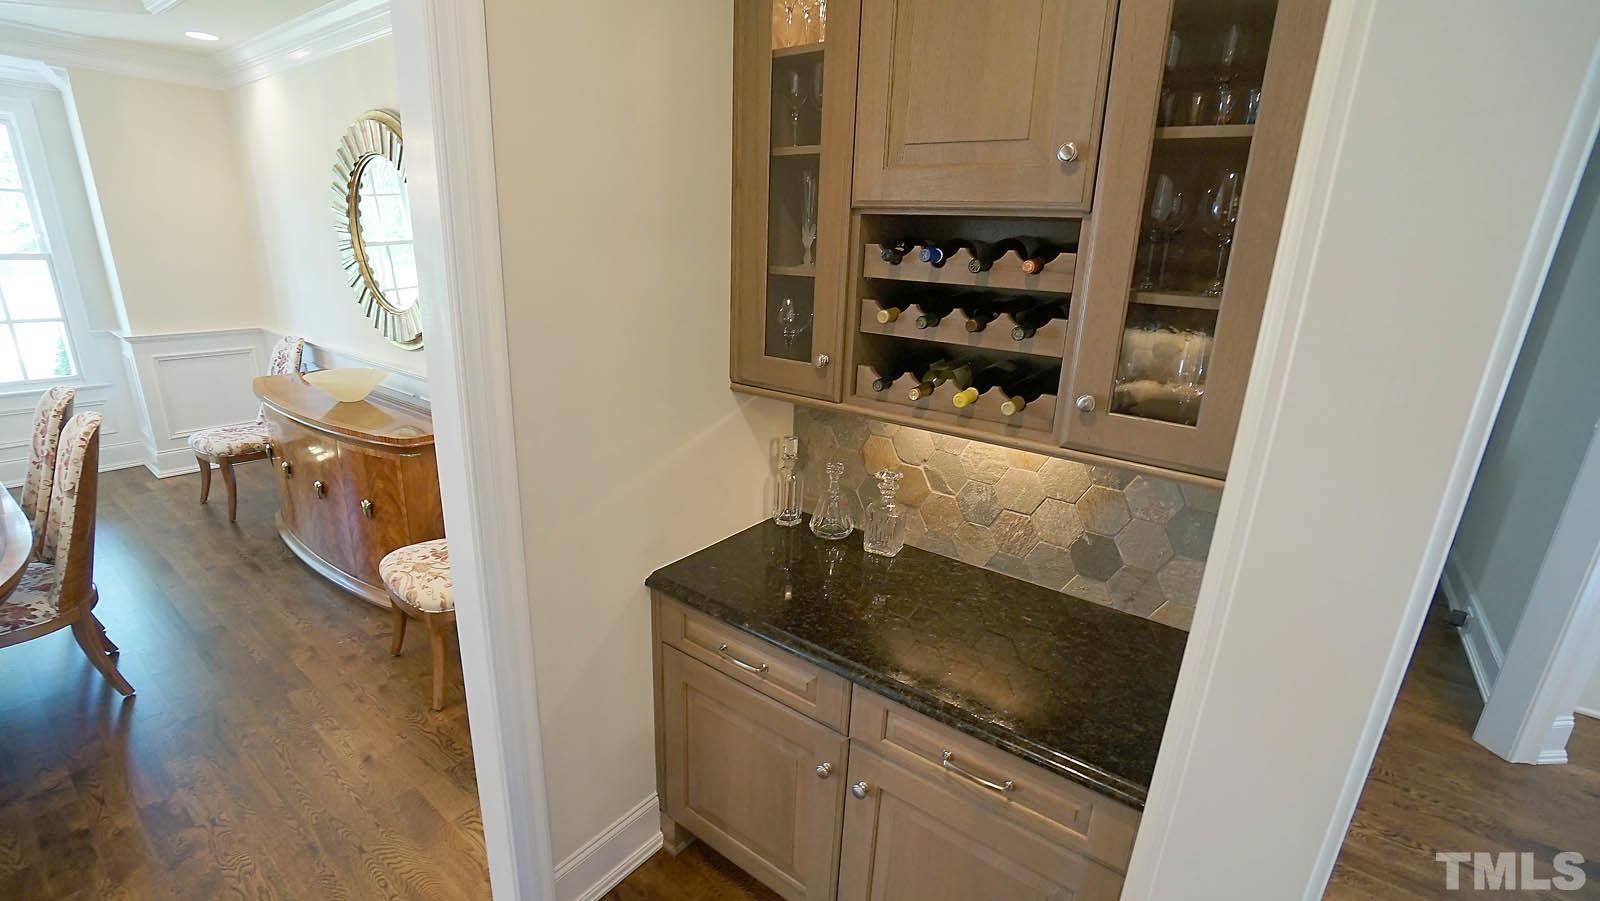 Butler's pantry with beverage fridge, granite counter and tile backsplash.